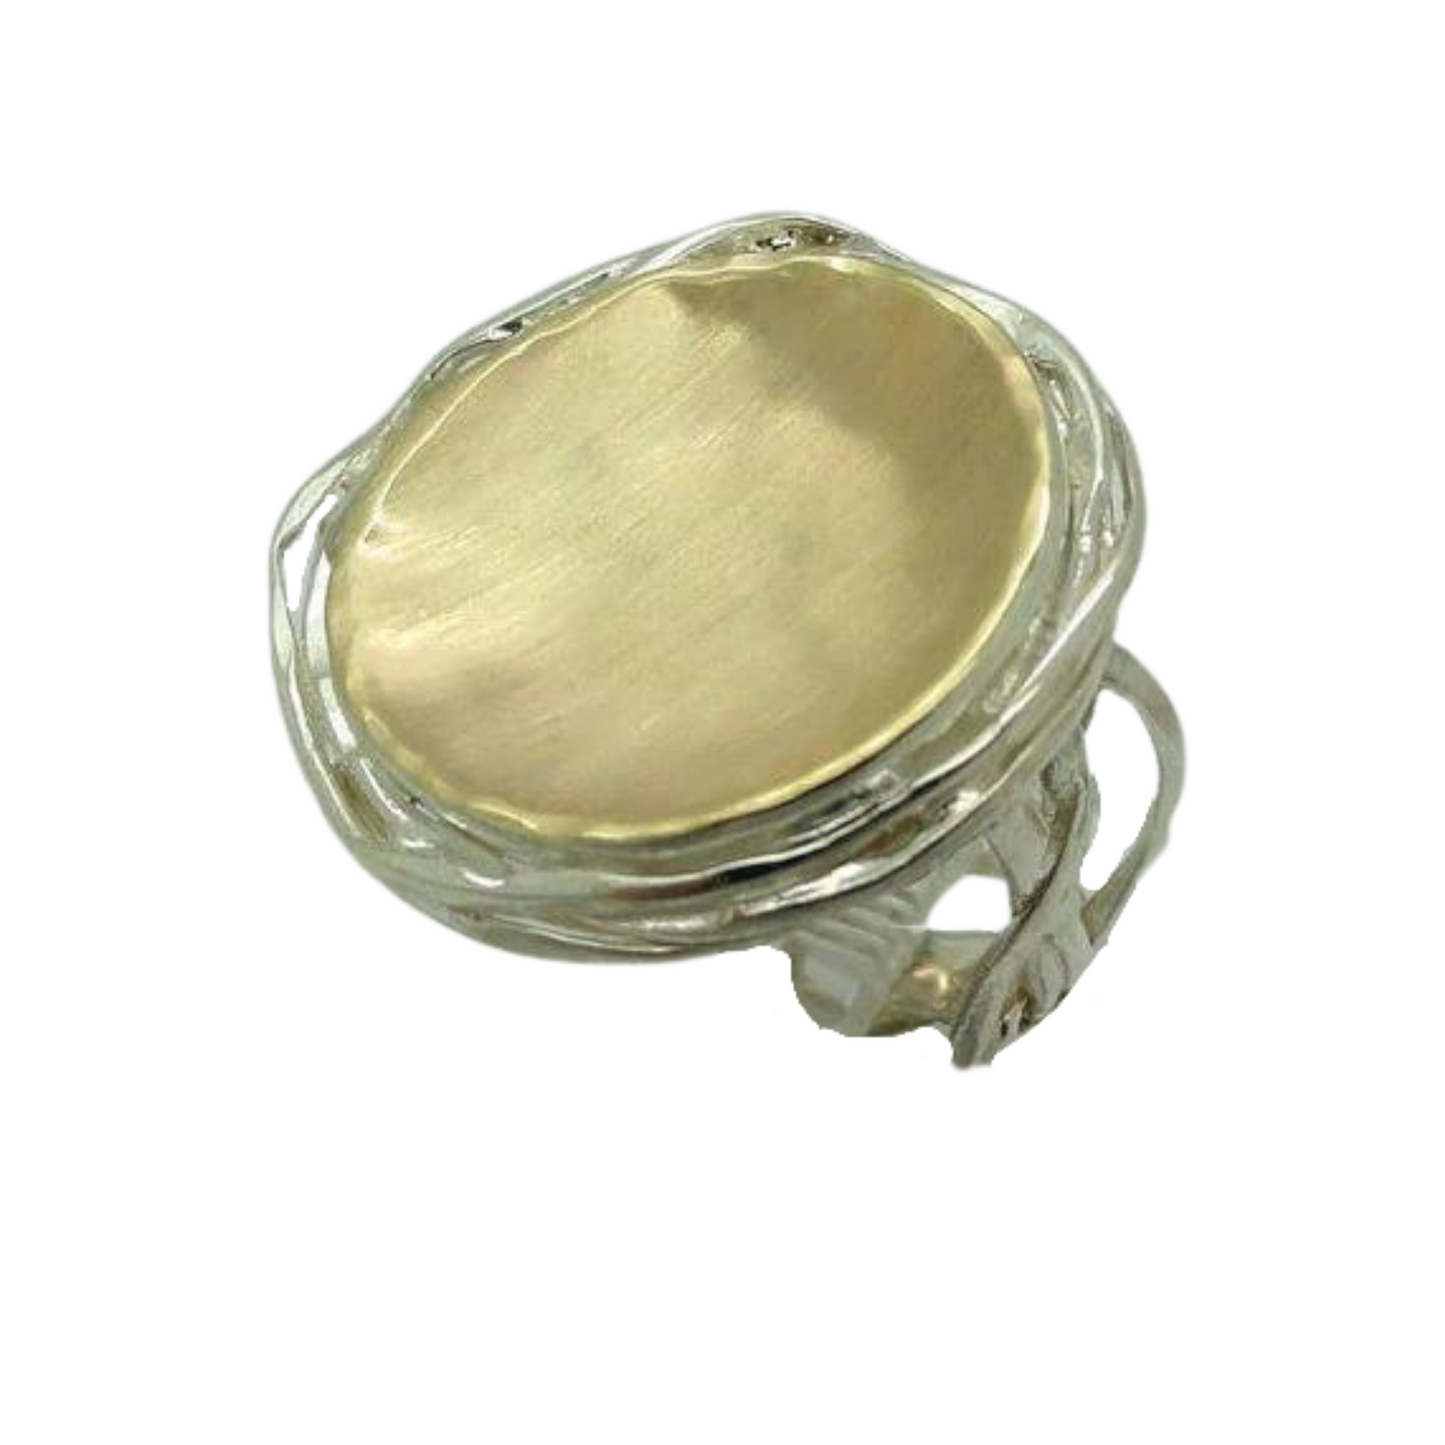 Stunning Israel Handmade Huge 9k Yellow Gold 925 sterling Silver Ring